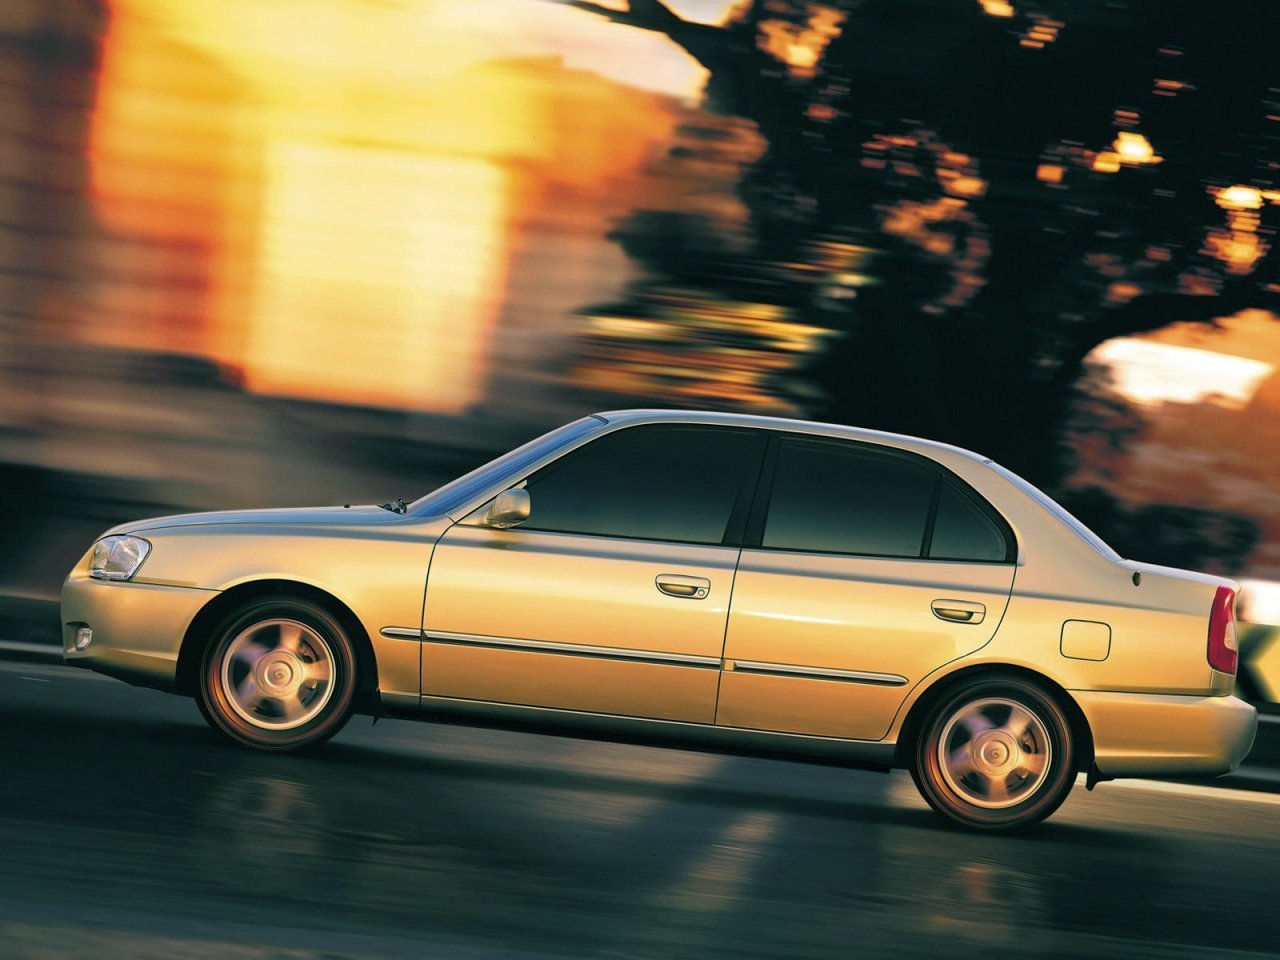 седан Hyundai Accent 2000 - 2003г выпуска модификация 1.3 AT (75 л.с.)